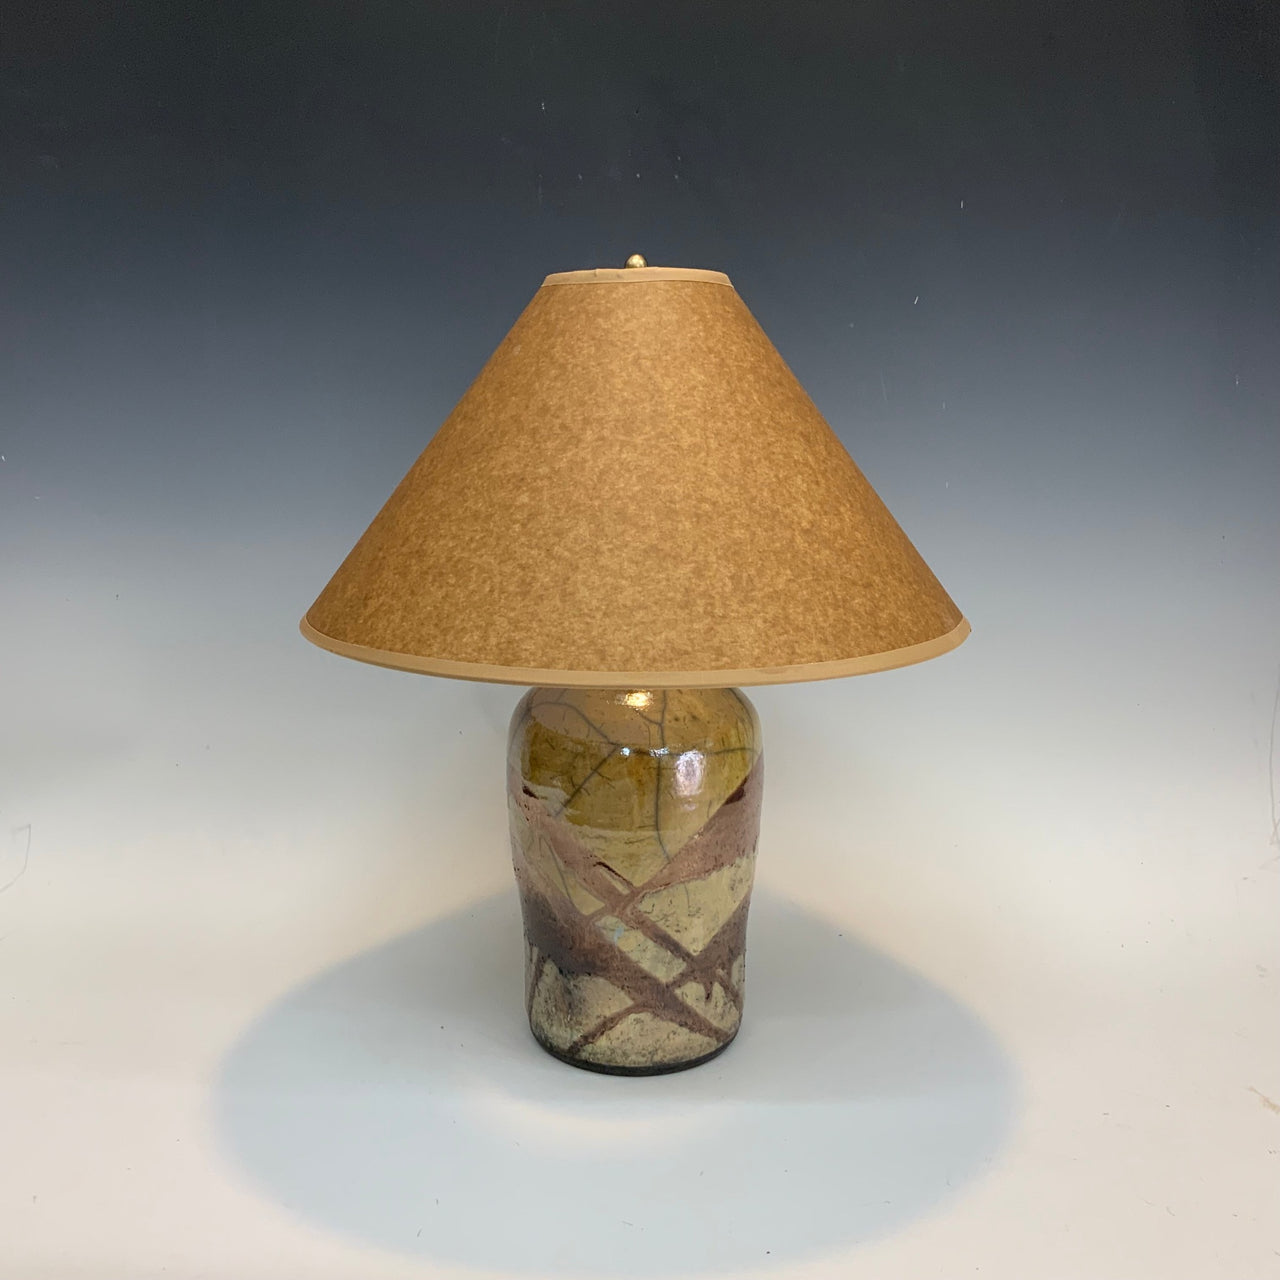 Small Raku lamp in gold and copper